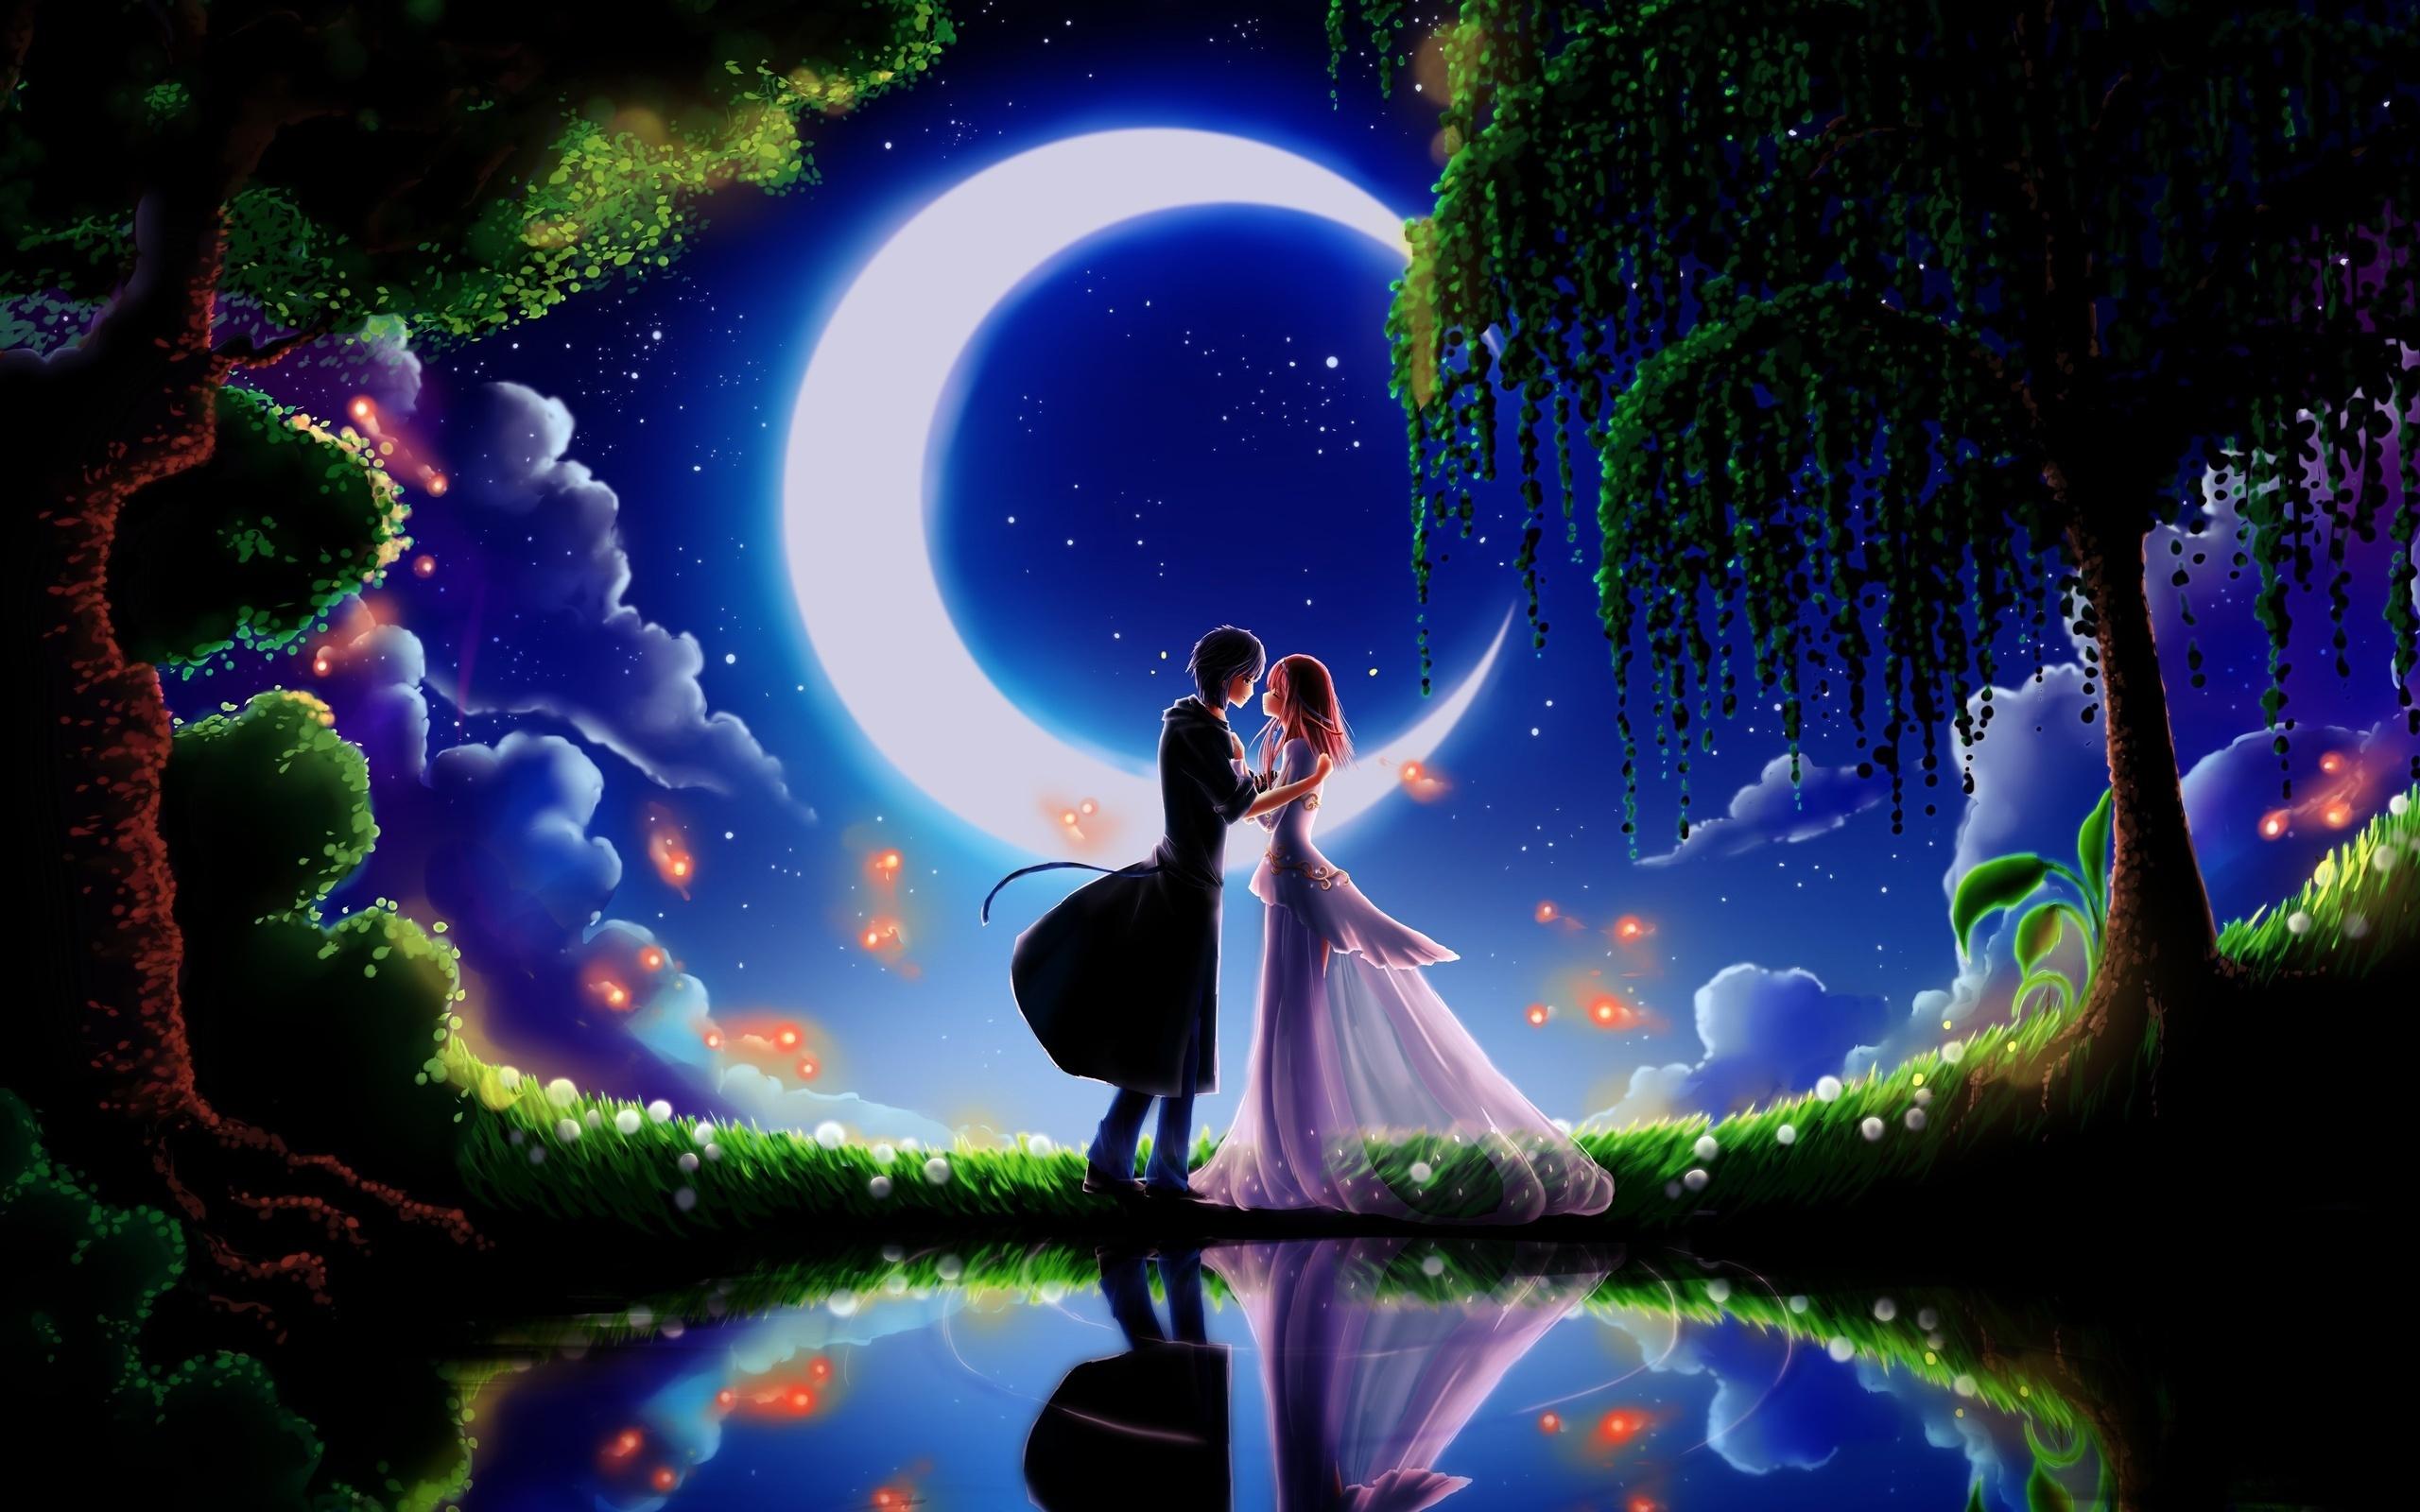 Couple Kiss Romantic Anime Wallpapers Wallpaper Cave